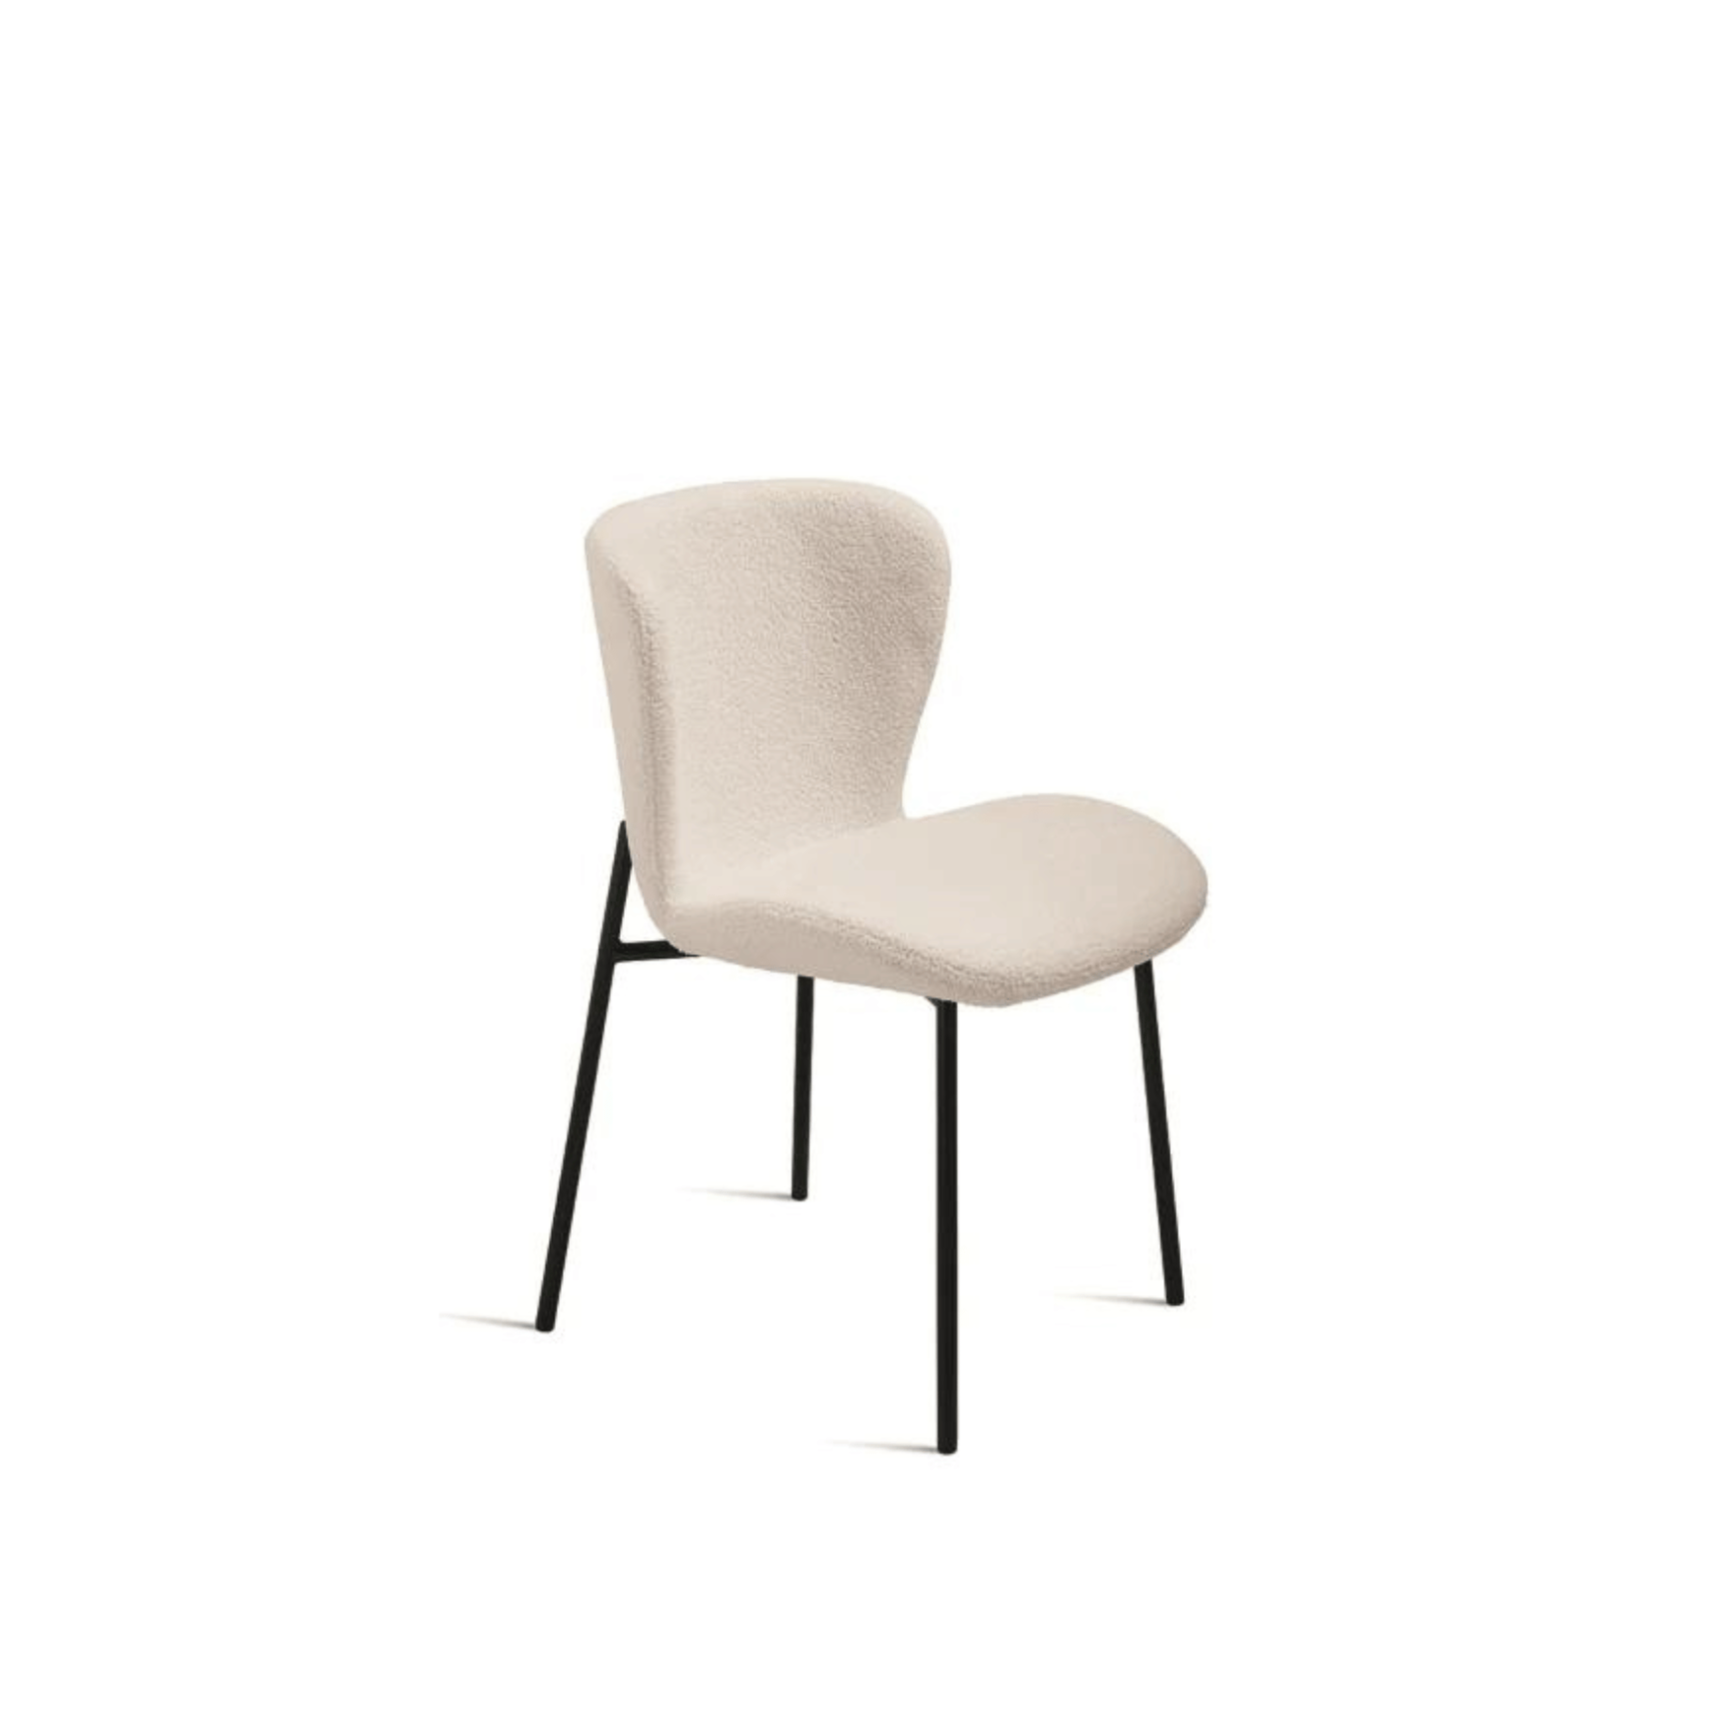 Set 4 pz sedie moderne imbottite "Abram" in tessuto bouclé écru da soggiorno